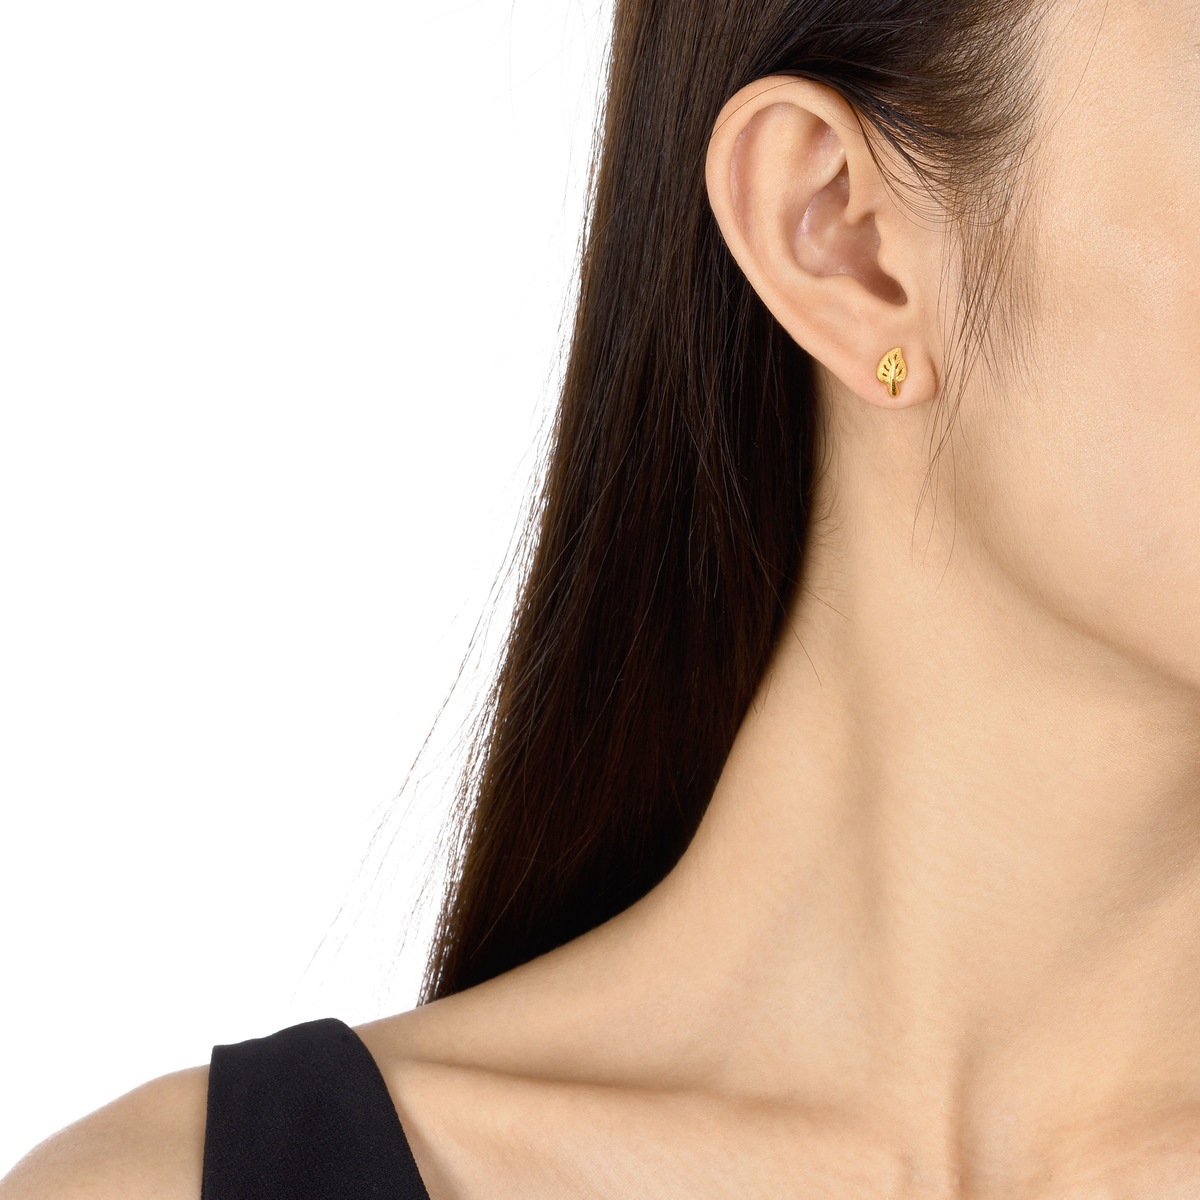 999.9 Gold Leaf Earrings | Chow Sang Sang Jewellery eShop